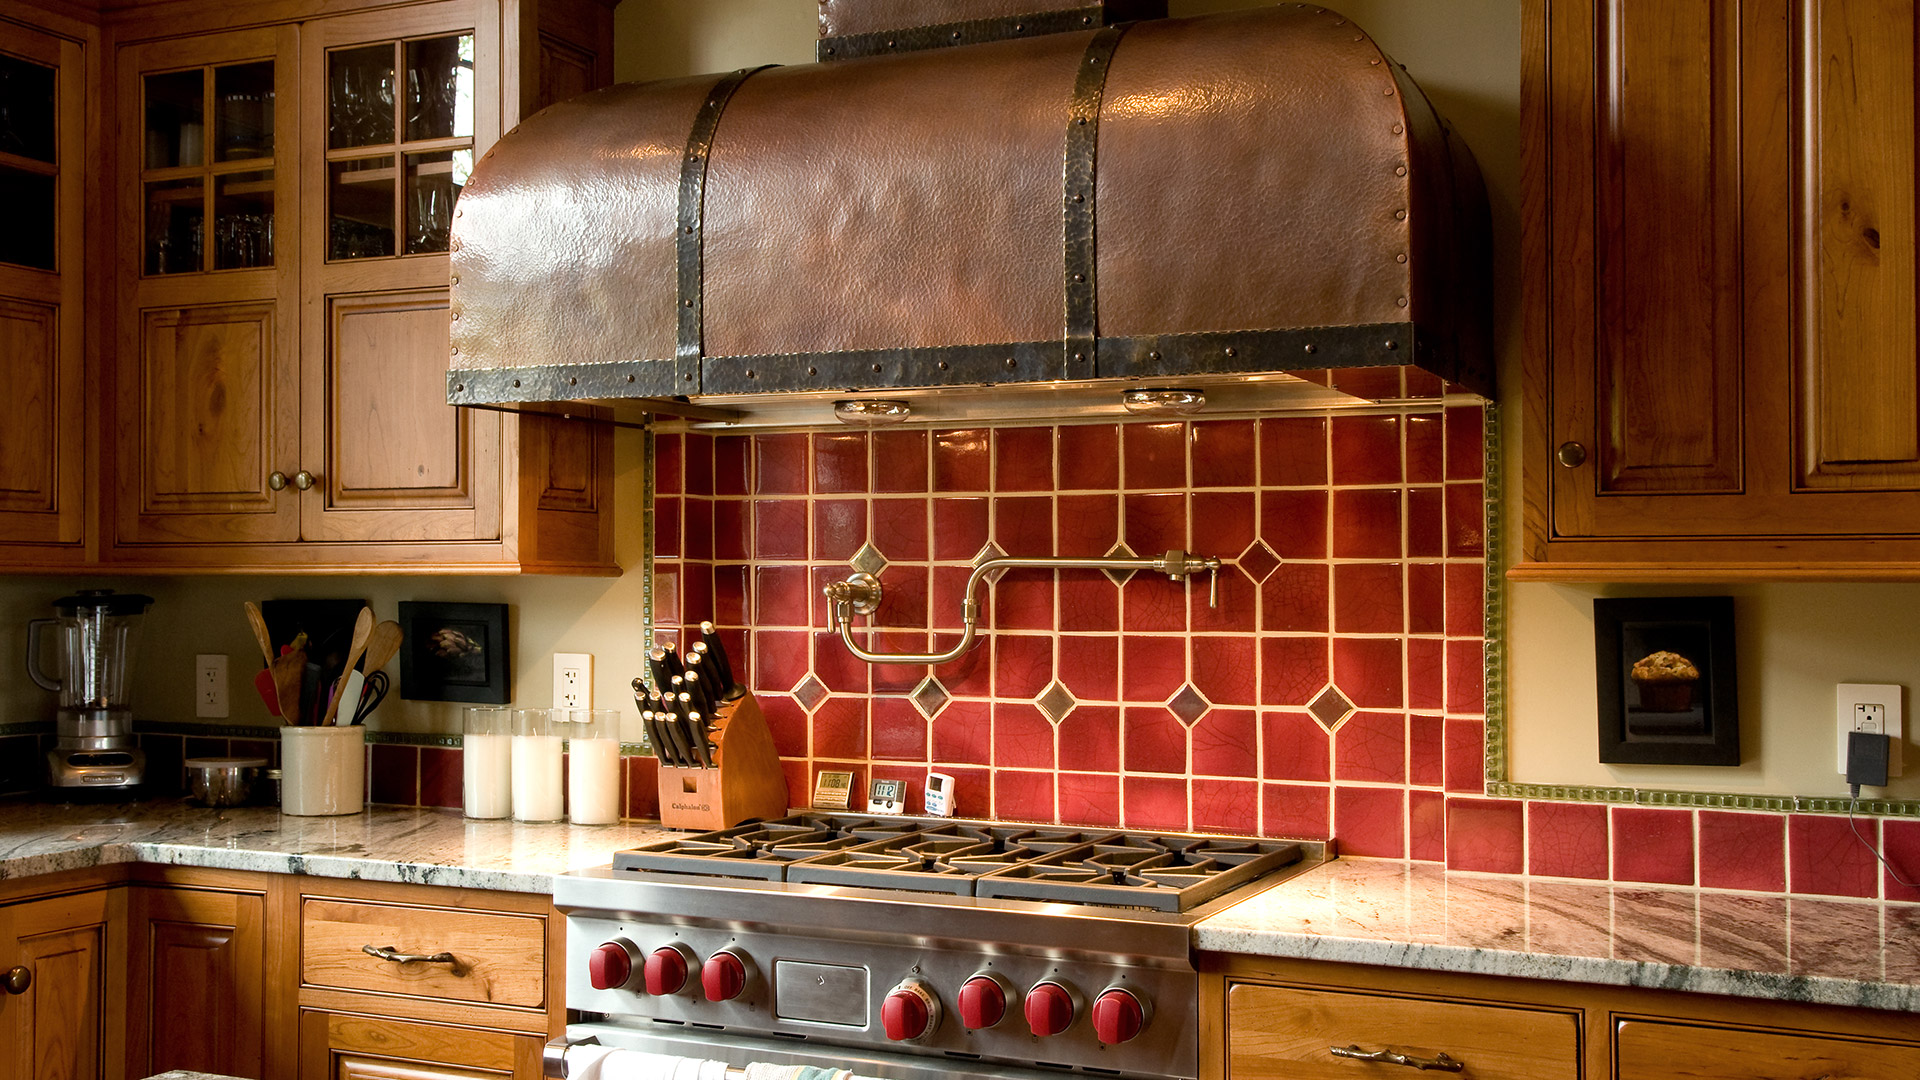 Lake Wentworth, New Hampshire kitchen with copper range hood